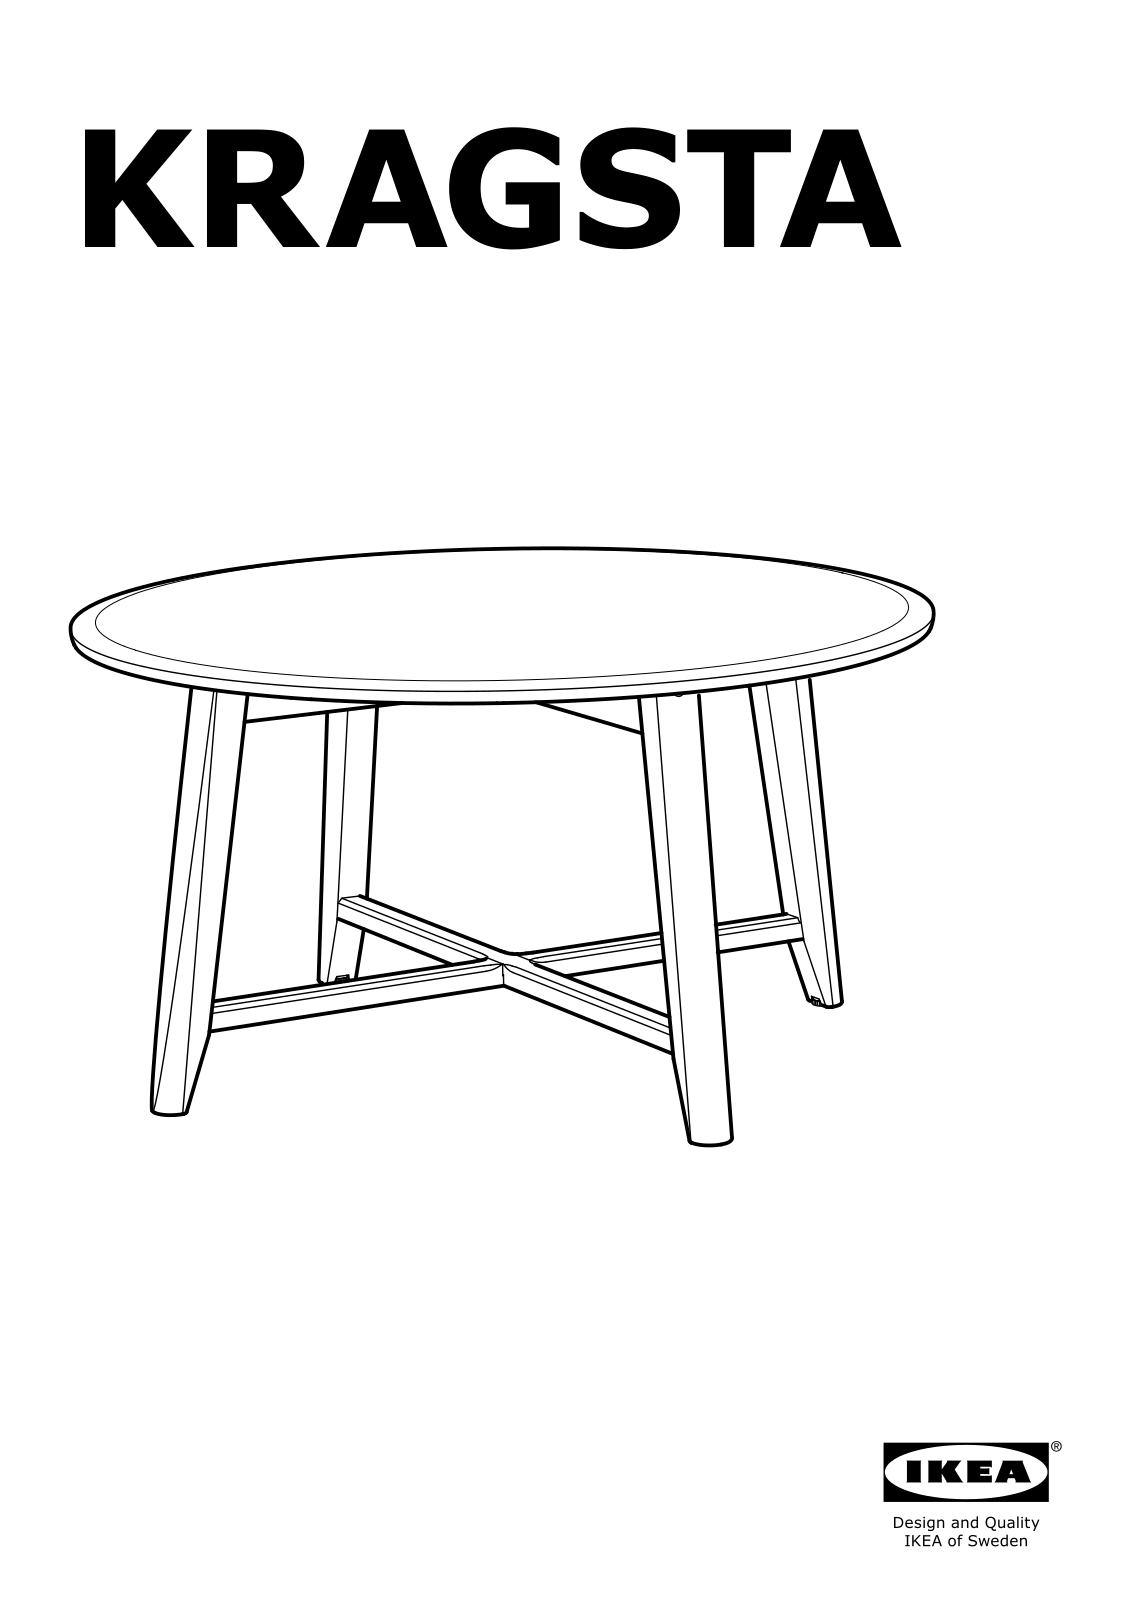 IKEA KRAGSTA User Manual